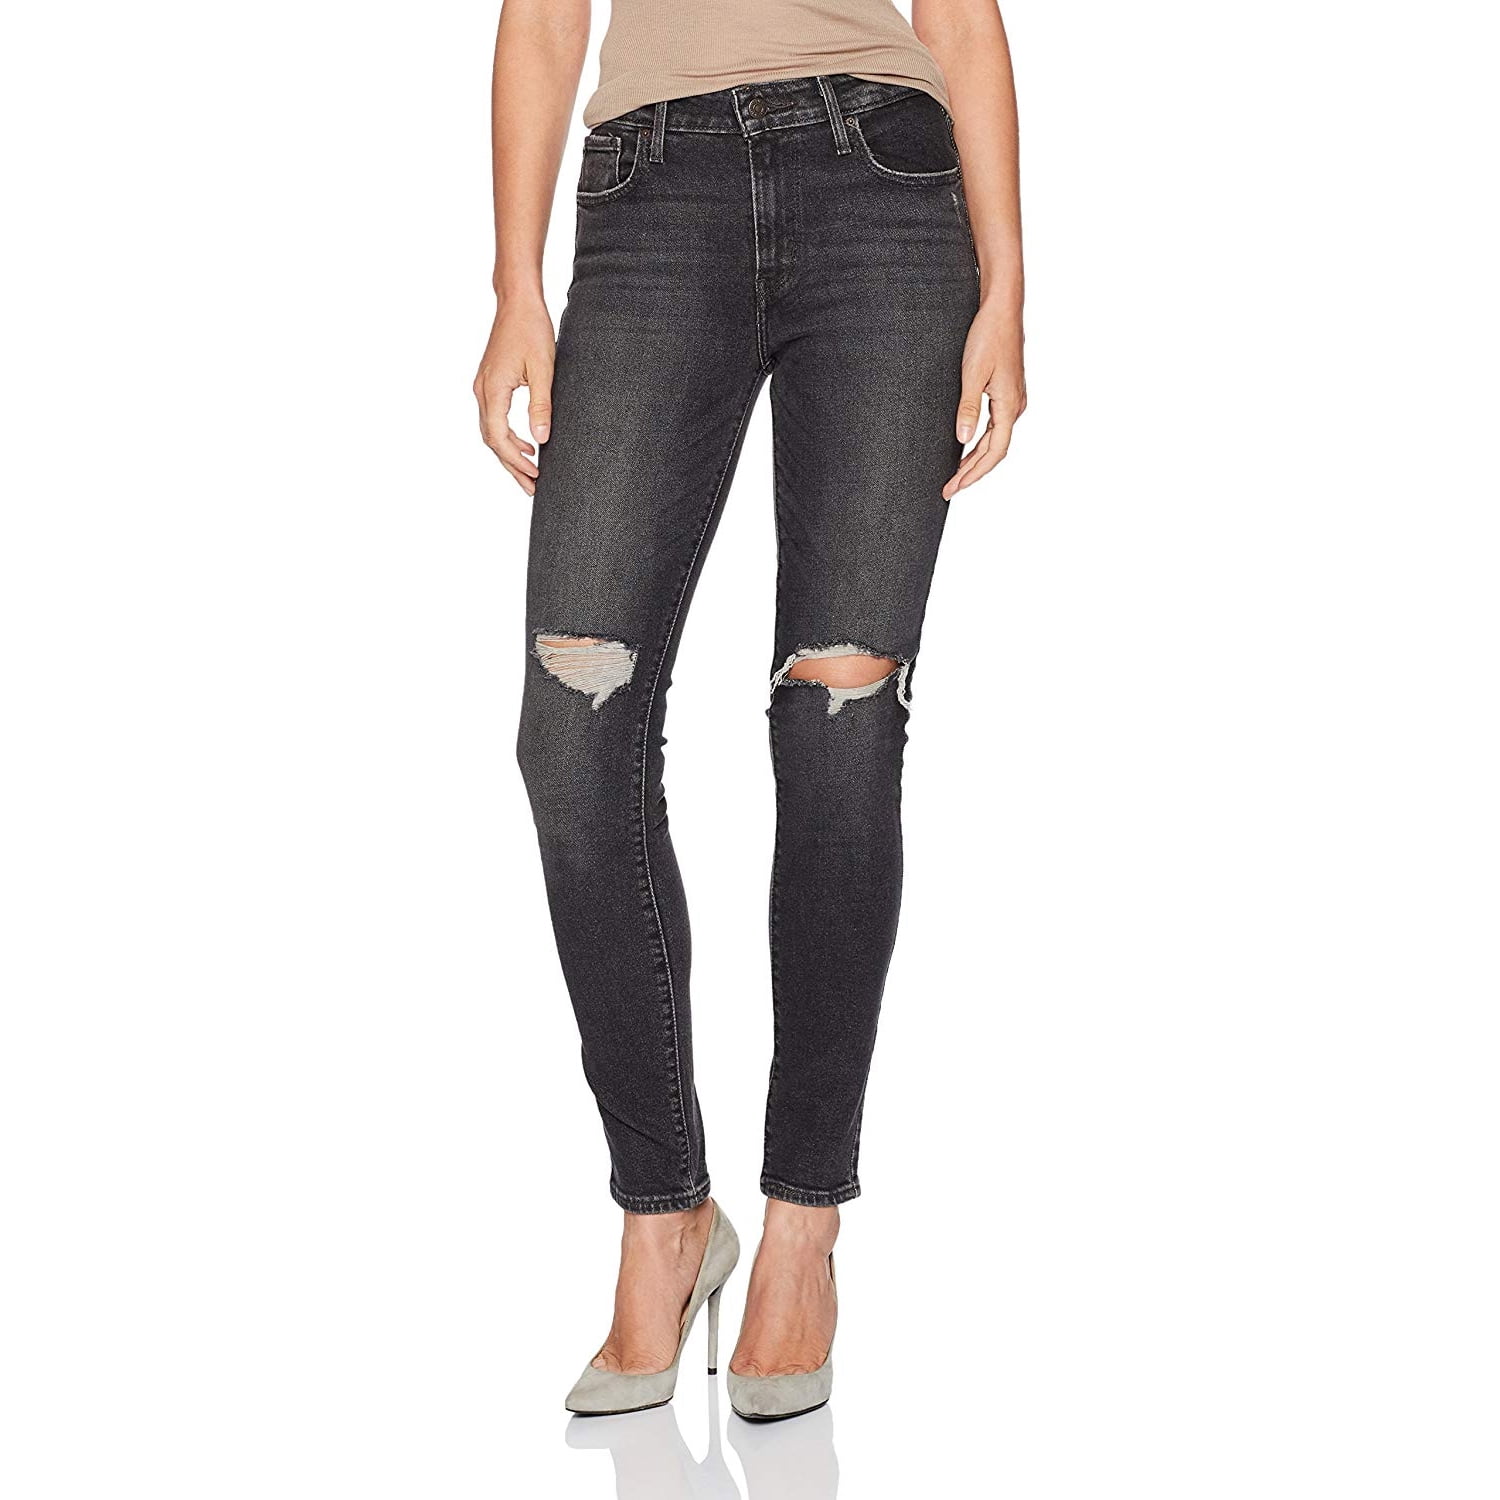 Levi's Women's 721 High-Rise Skinny Jeans (Bandit Black, 24x30) -  